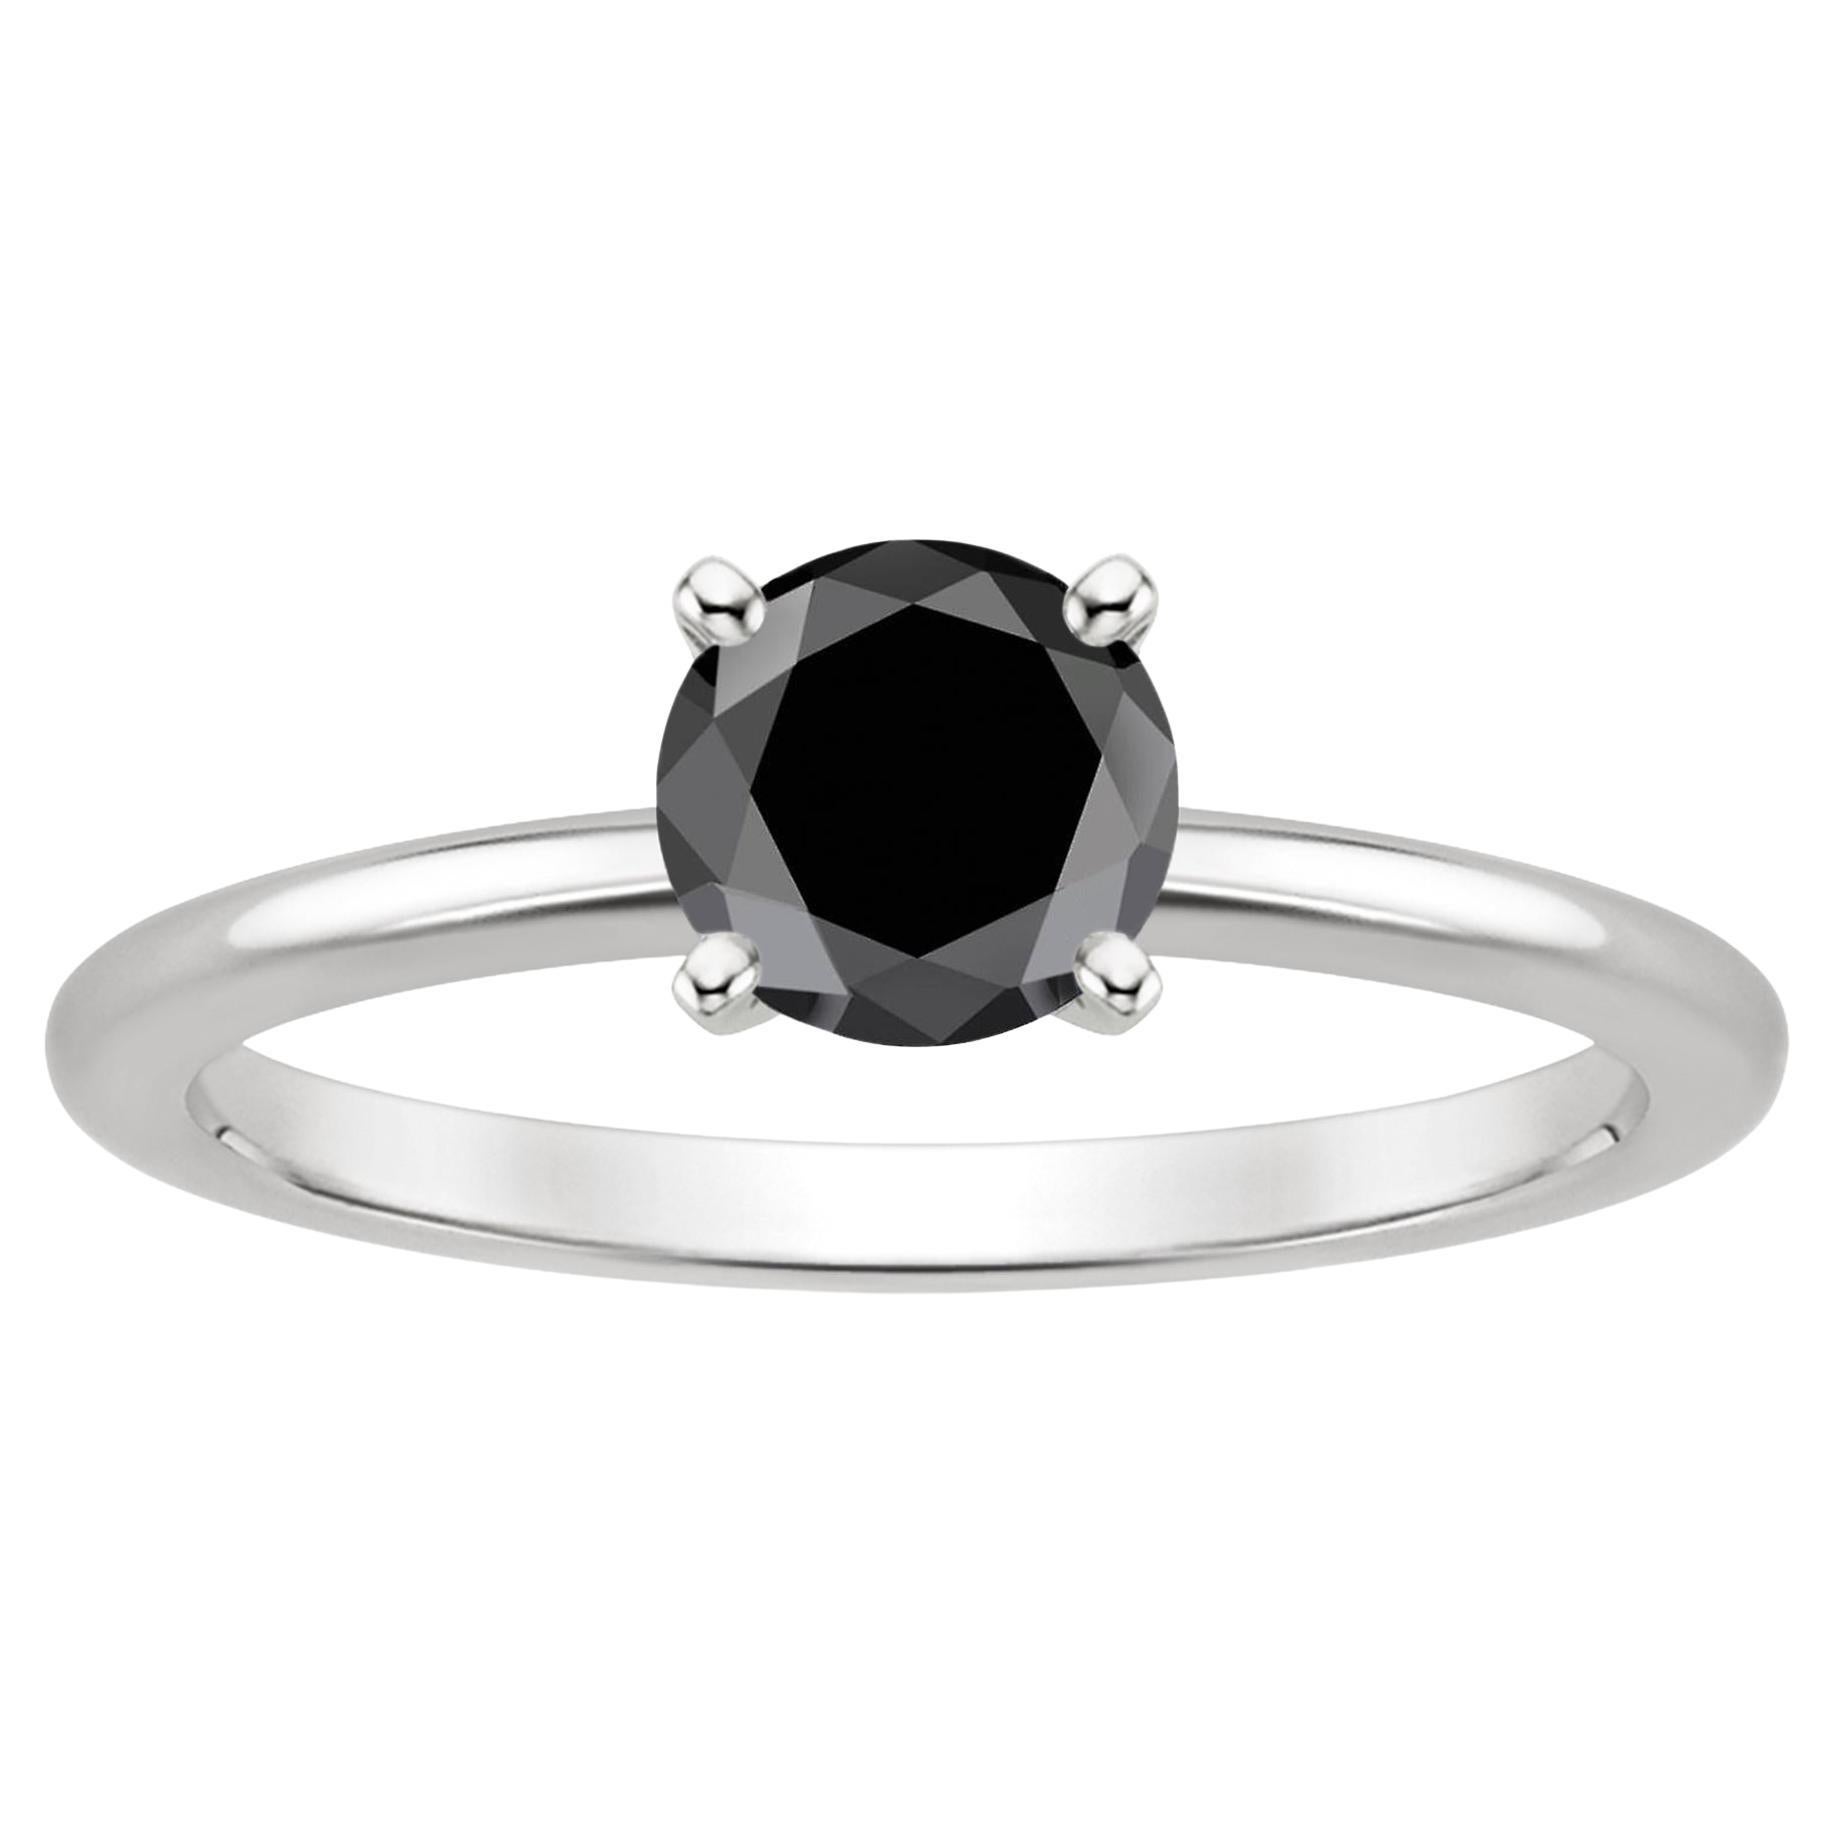 1.73 Carat Round Black Diamond Solitaire Ring in 14K White Gold